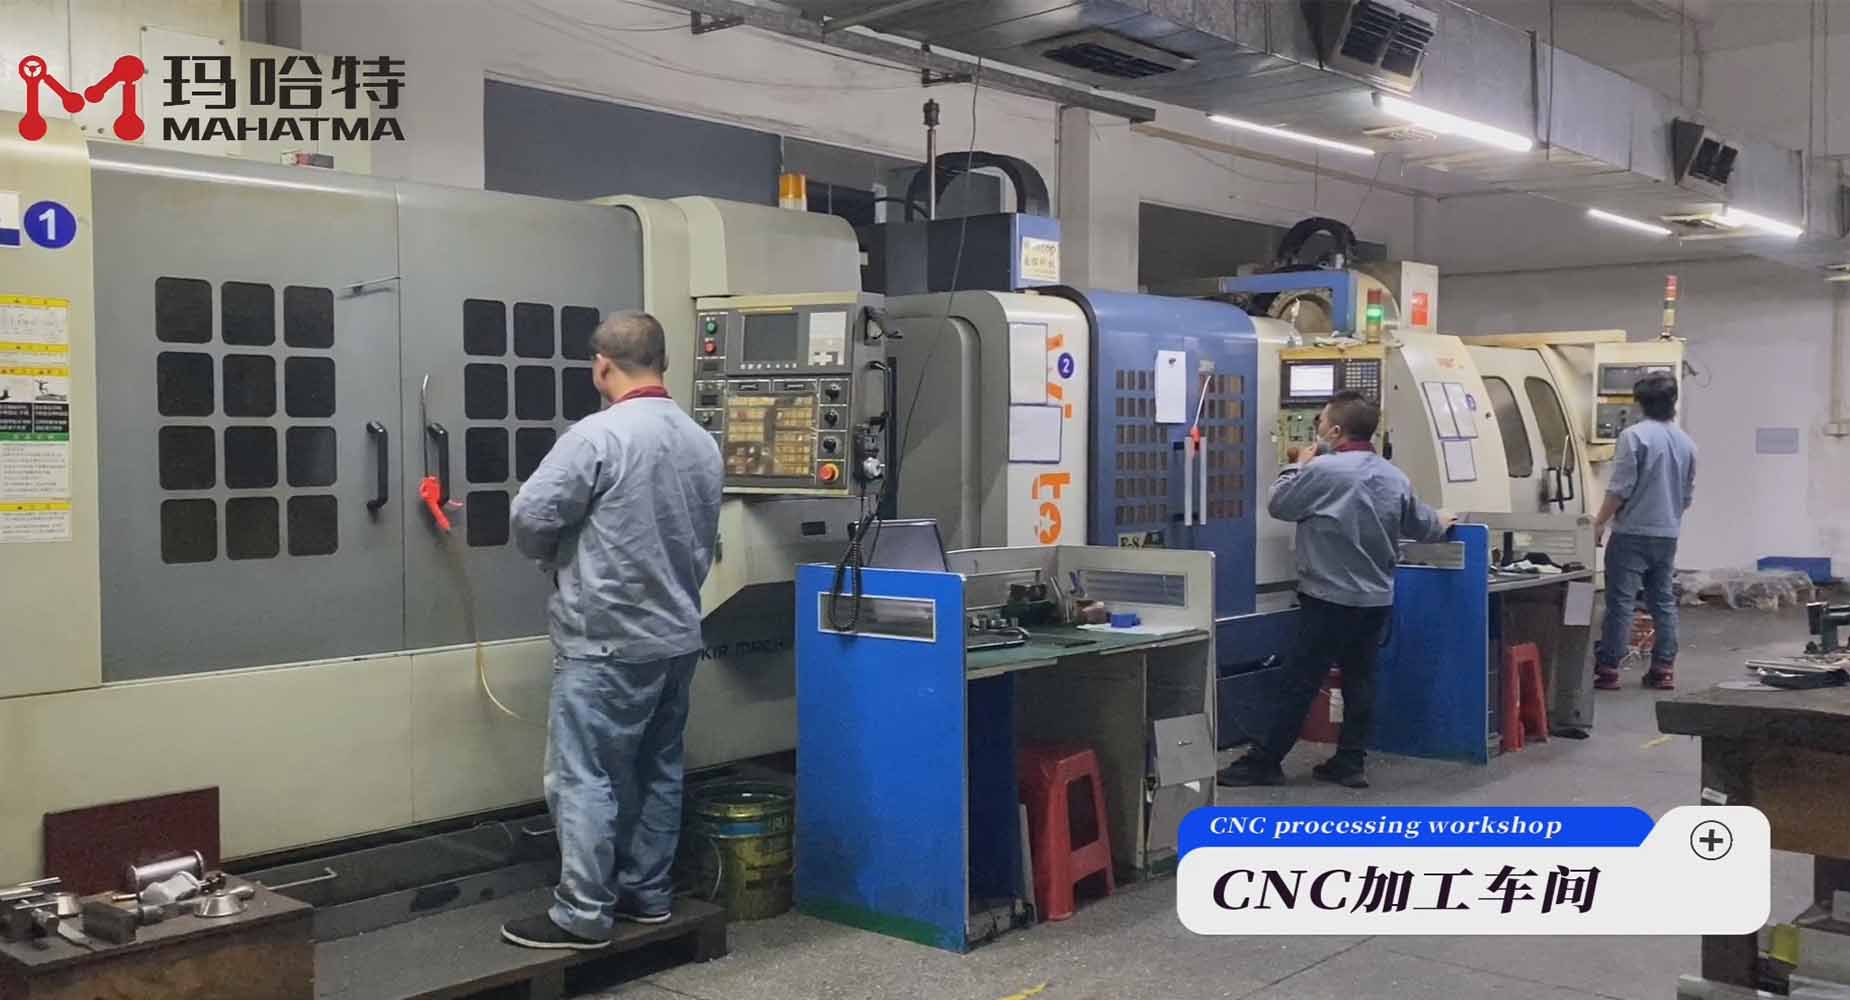 CNC processing workshop